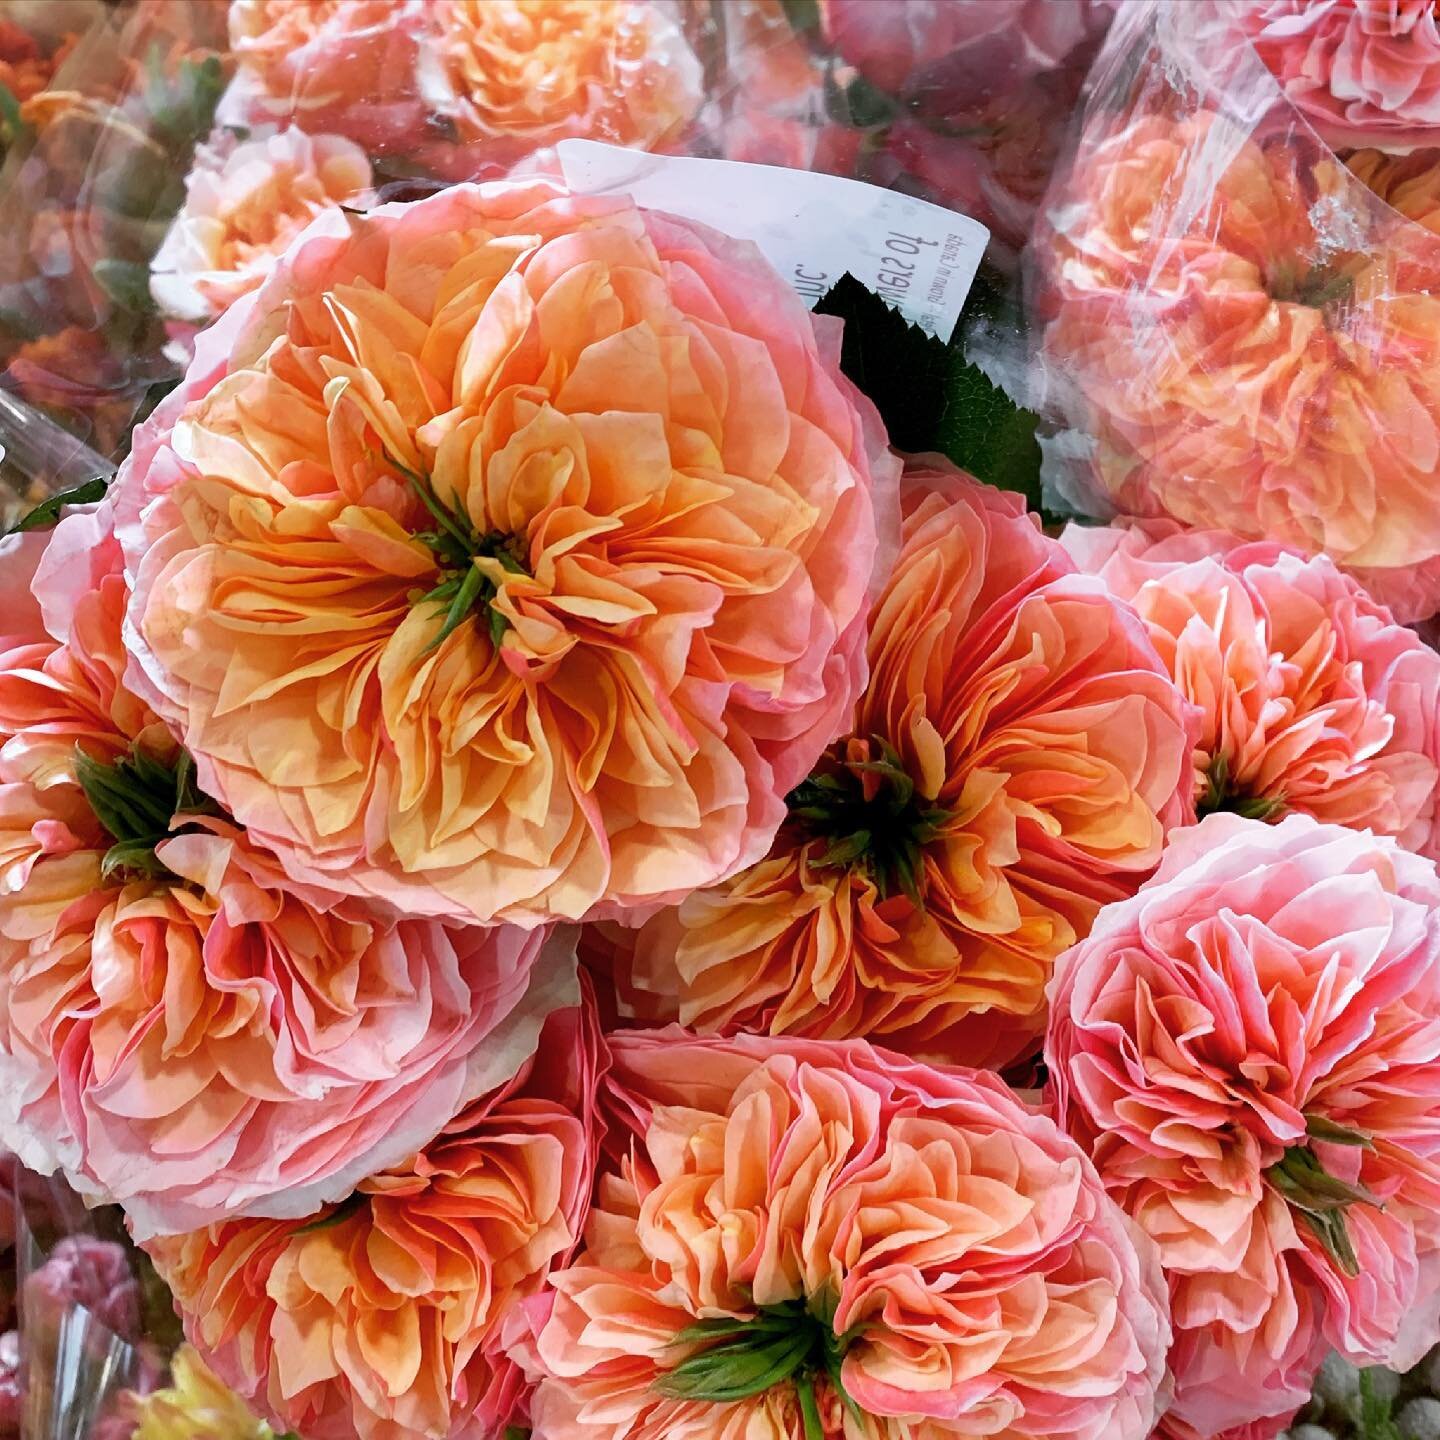 Kensington Gardens 😍 be still my heart ❤️ This garden rose is a show stopper with longevity 👌 #directflowers2florist